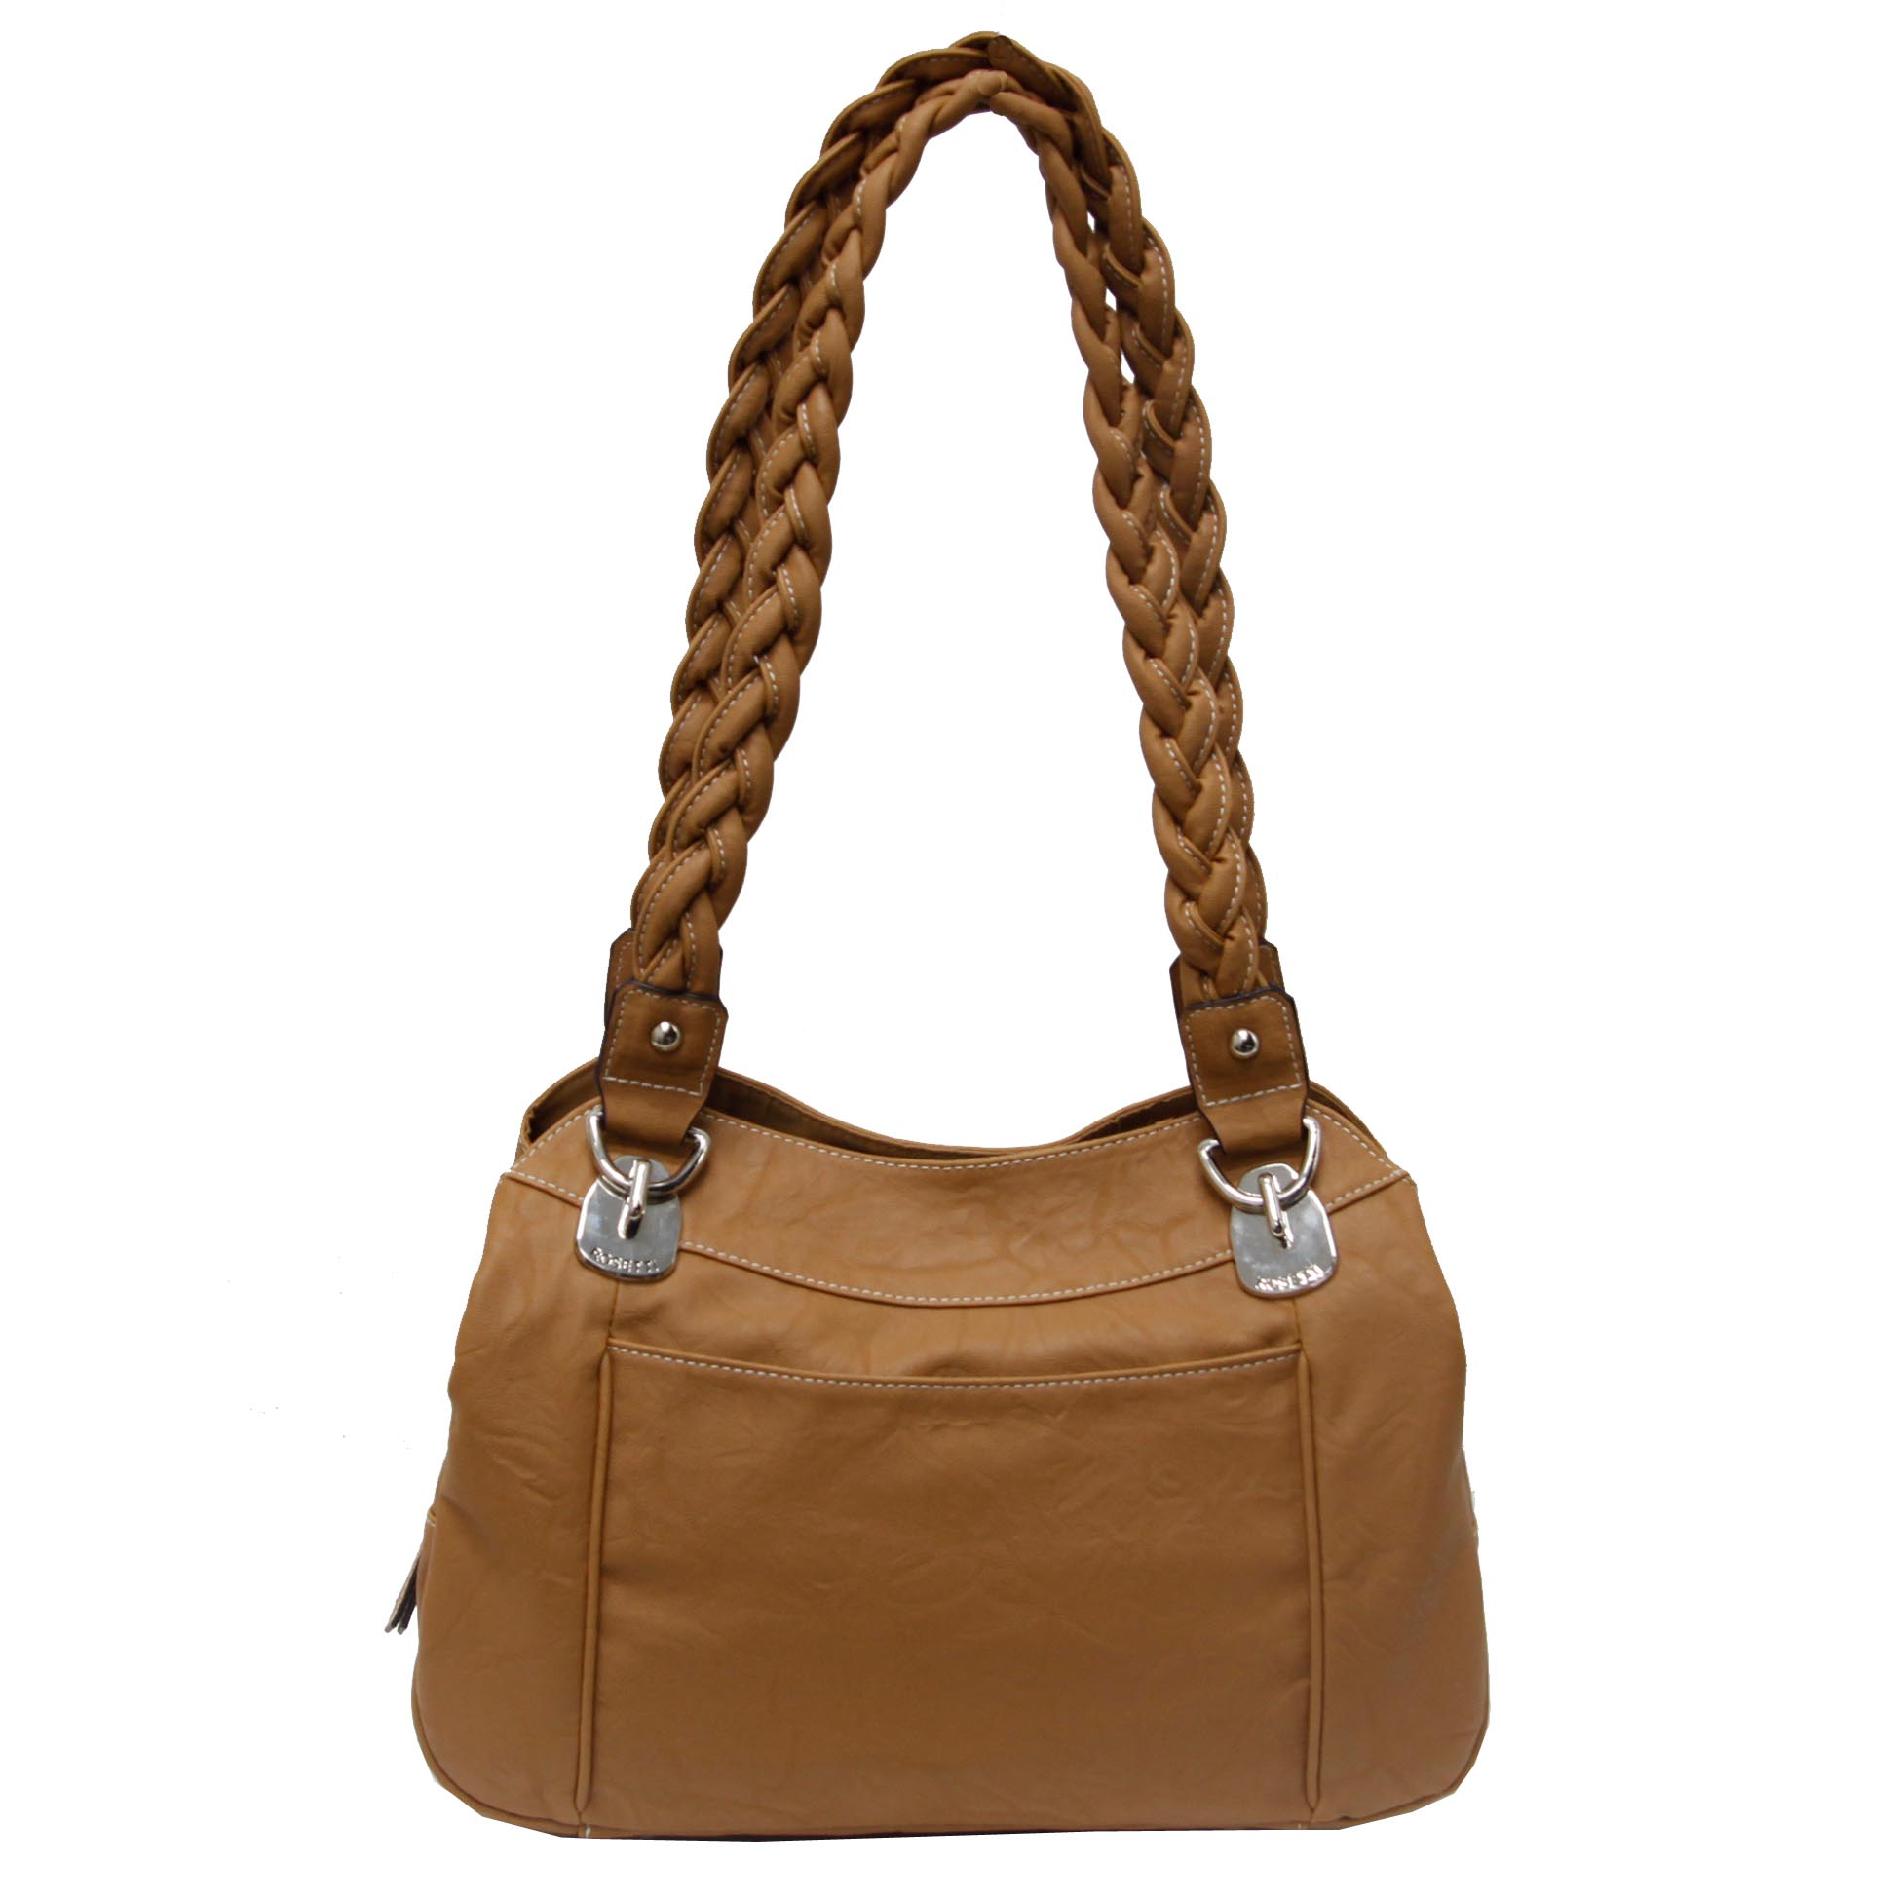 Rosetti Women's Faux Leather Handbag - Braided Straps